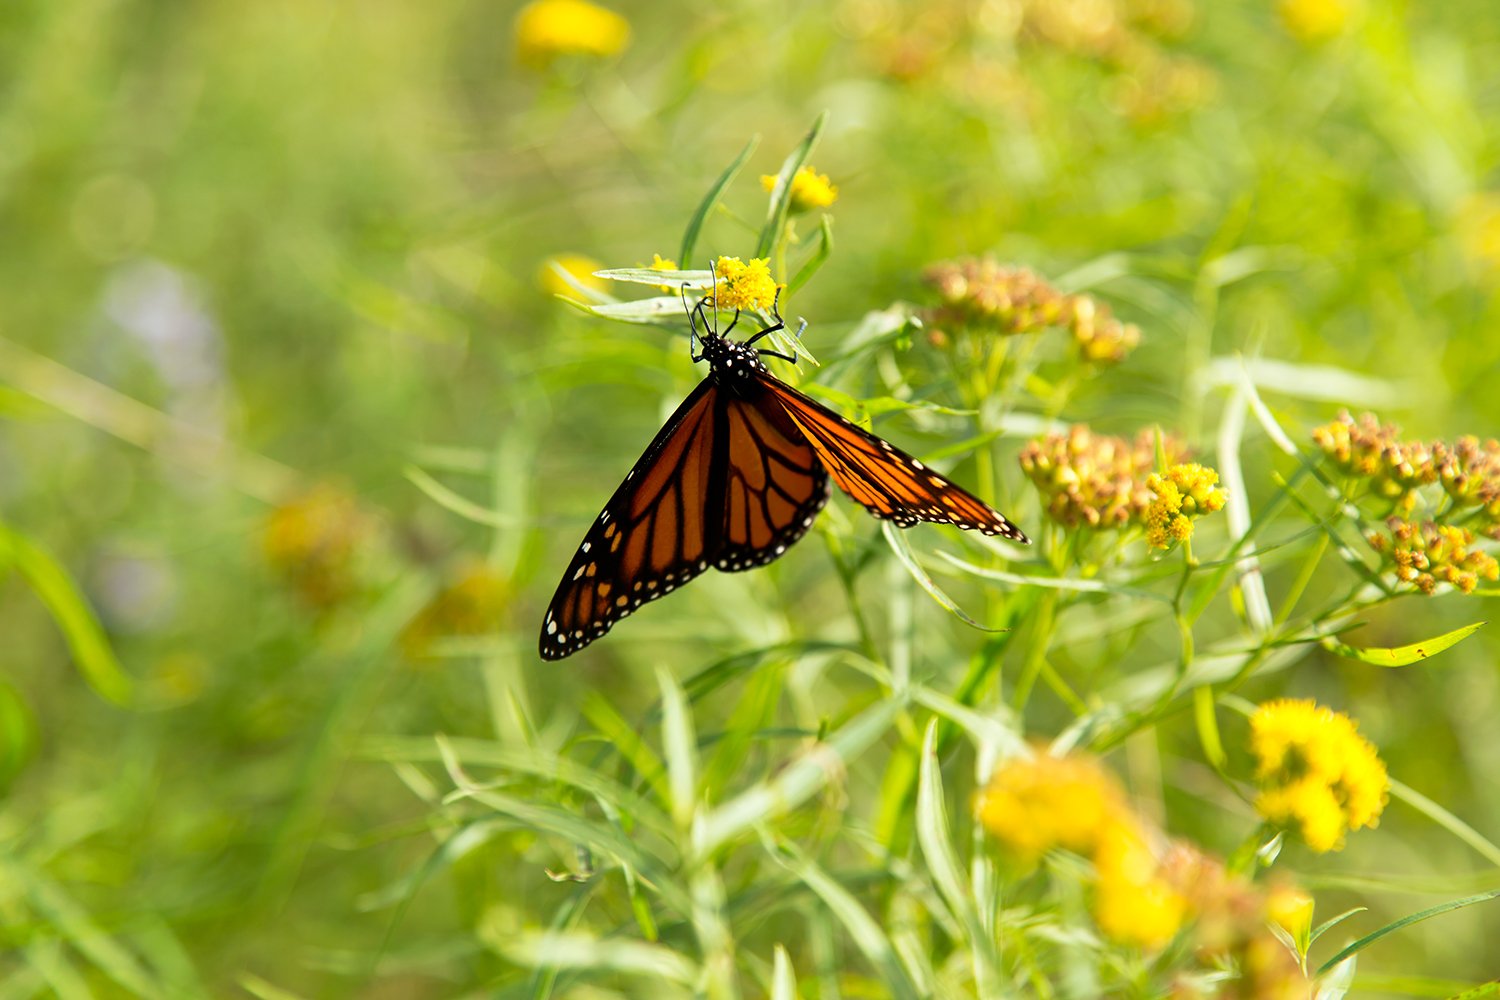   Agloe, NY (Monarch Butterfly (Danaus Plexippus&nbsp;#1)  Photographic documentation 